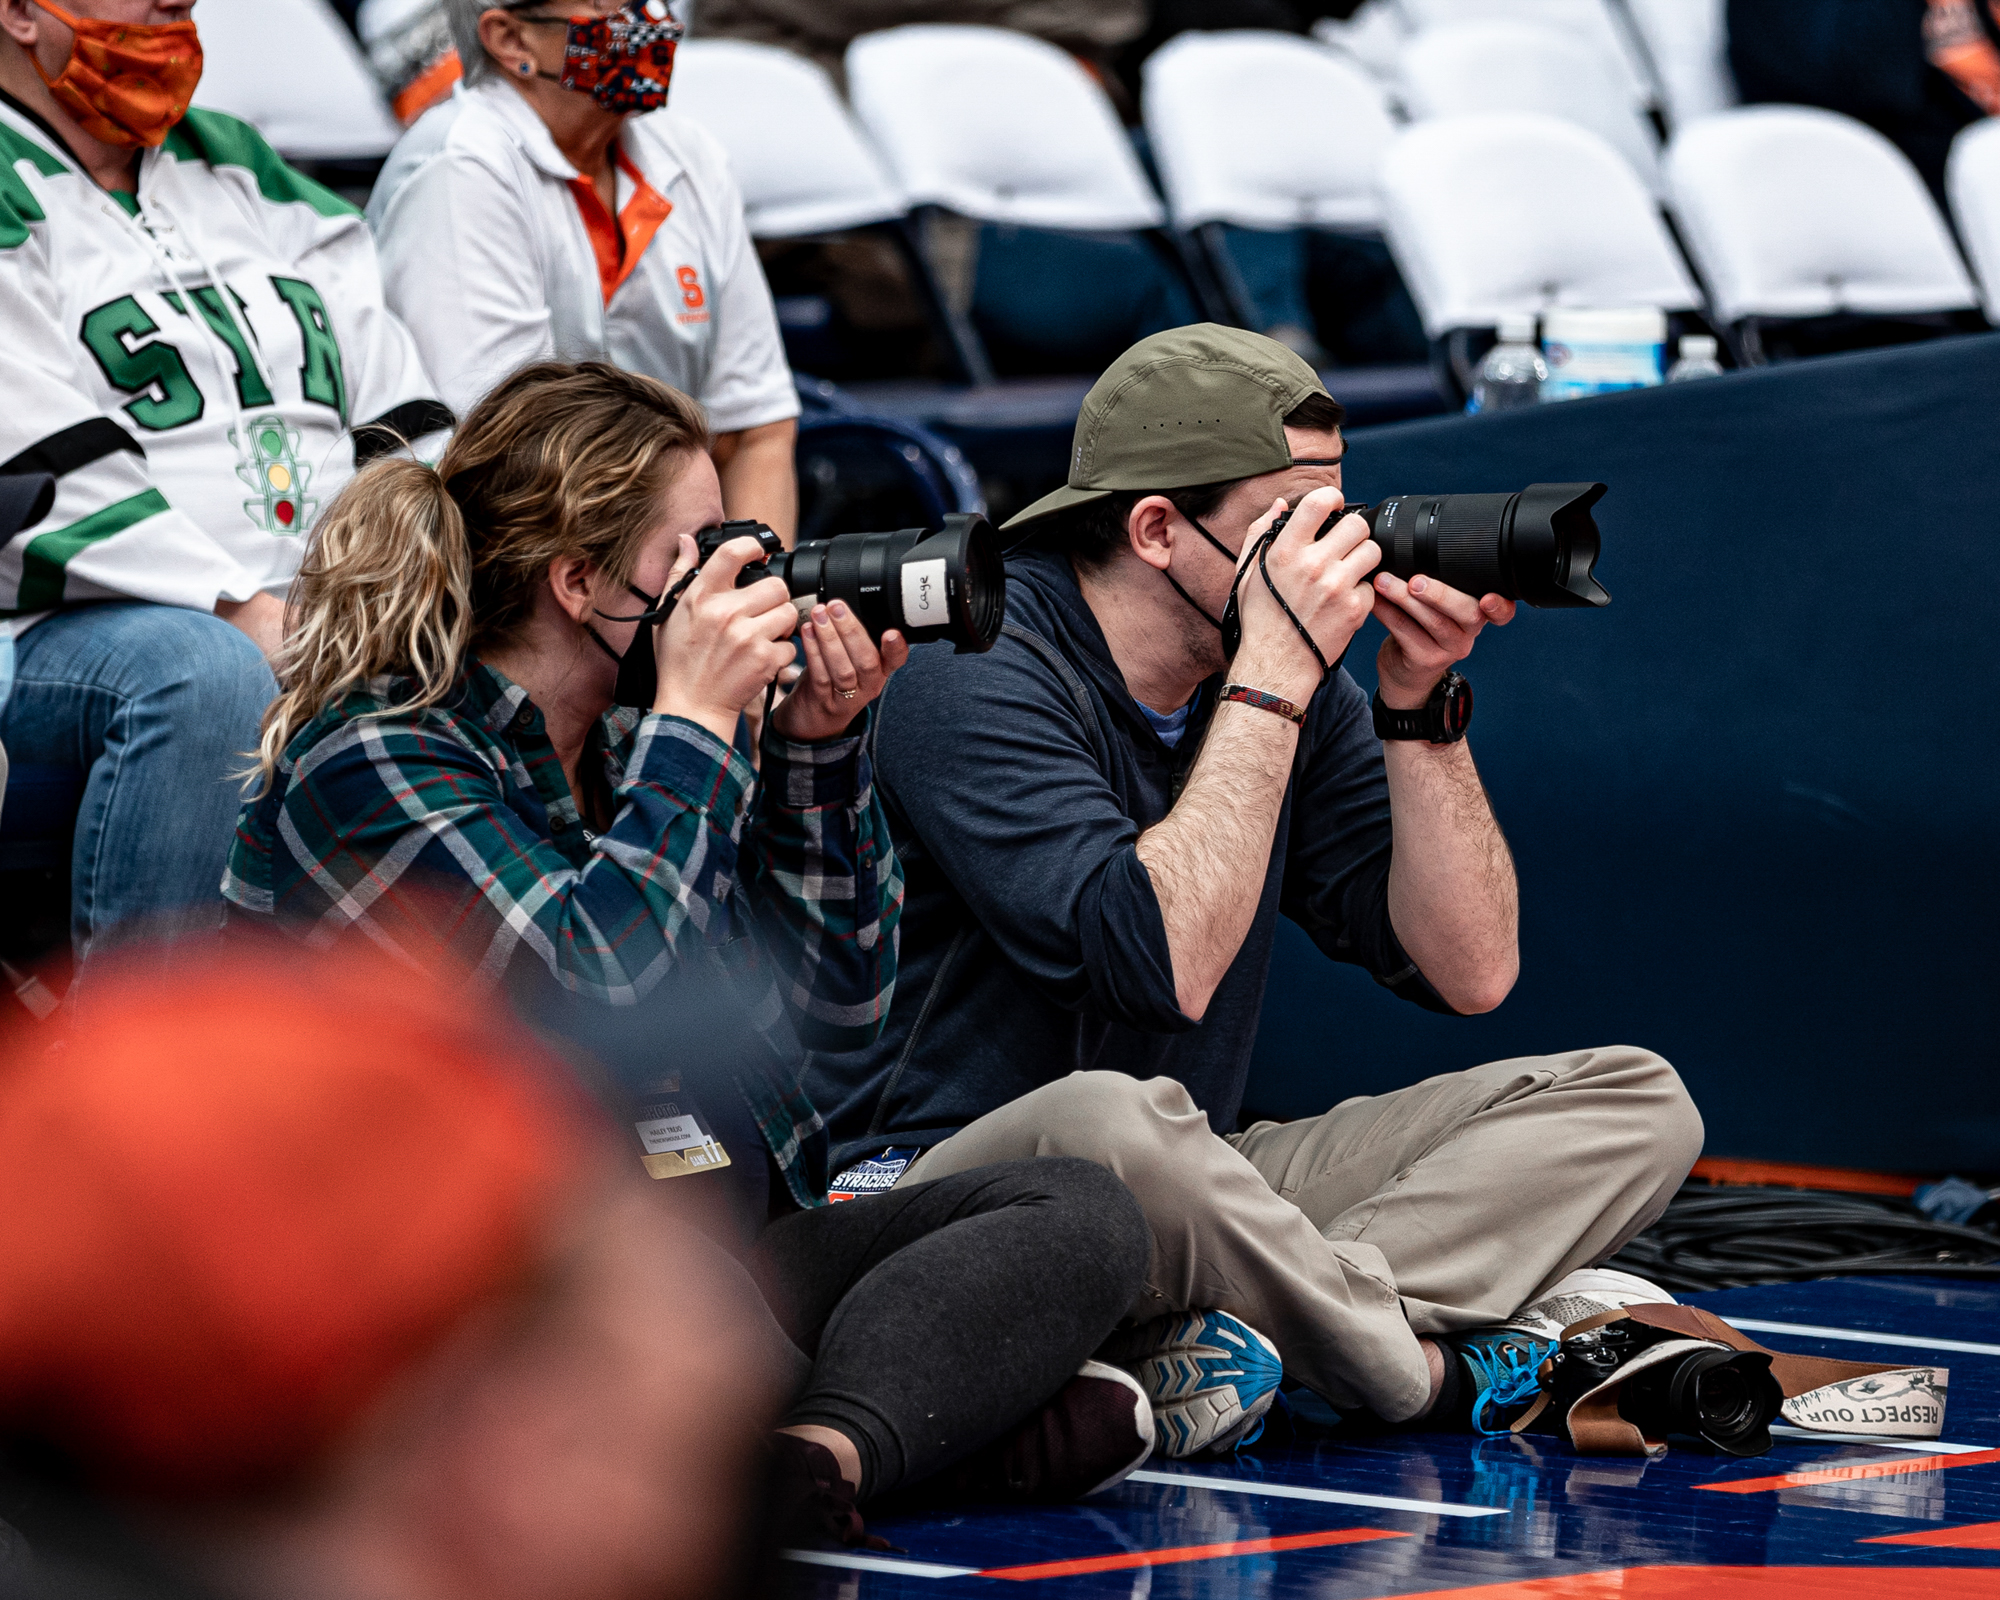 Hailey Trejo and Erik Makic take photos at a basketball game